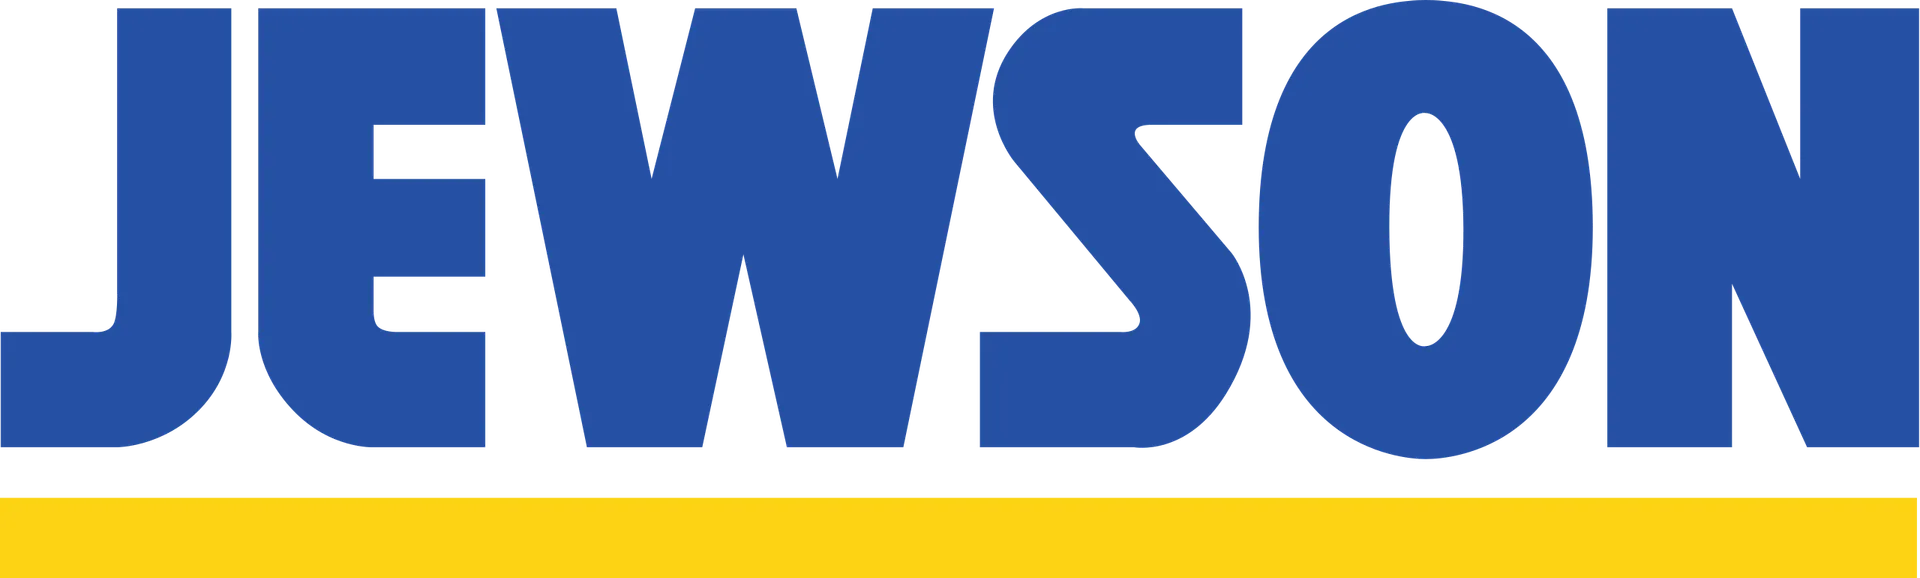 JEWSON logo